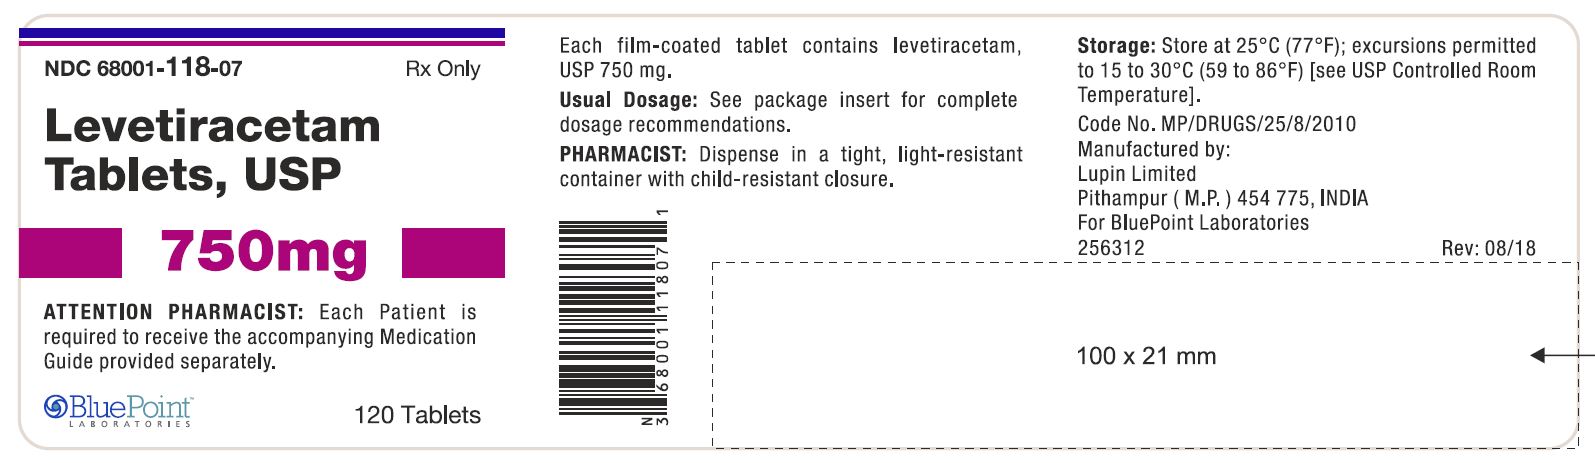 Levetiracetam Tablets, USP 750mg 120 CT Label - Rev 08-18.JPG